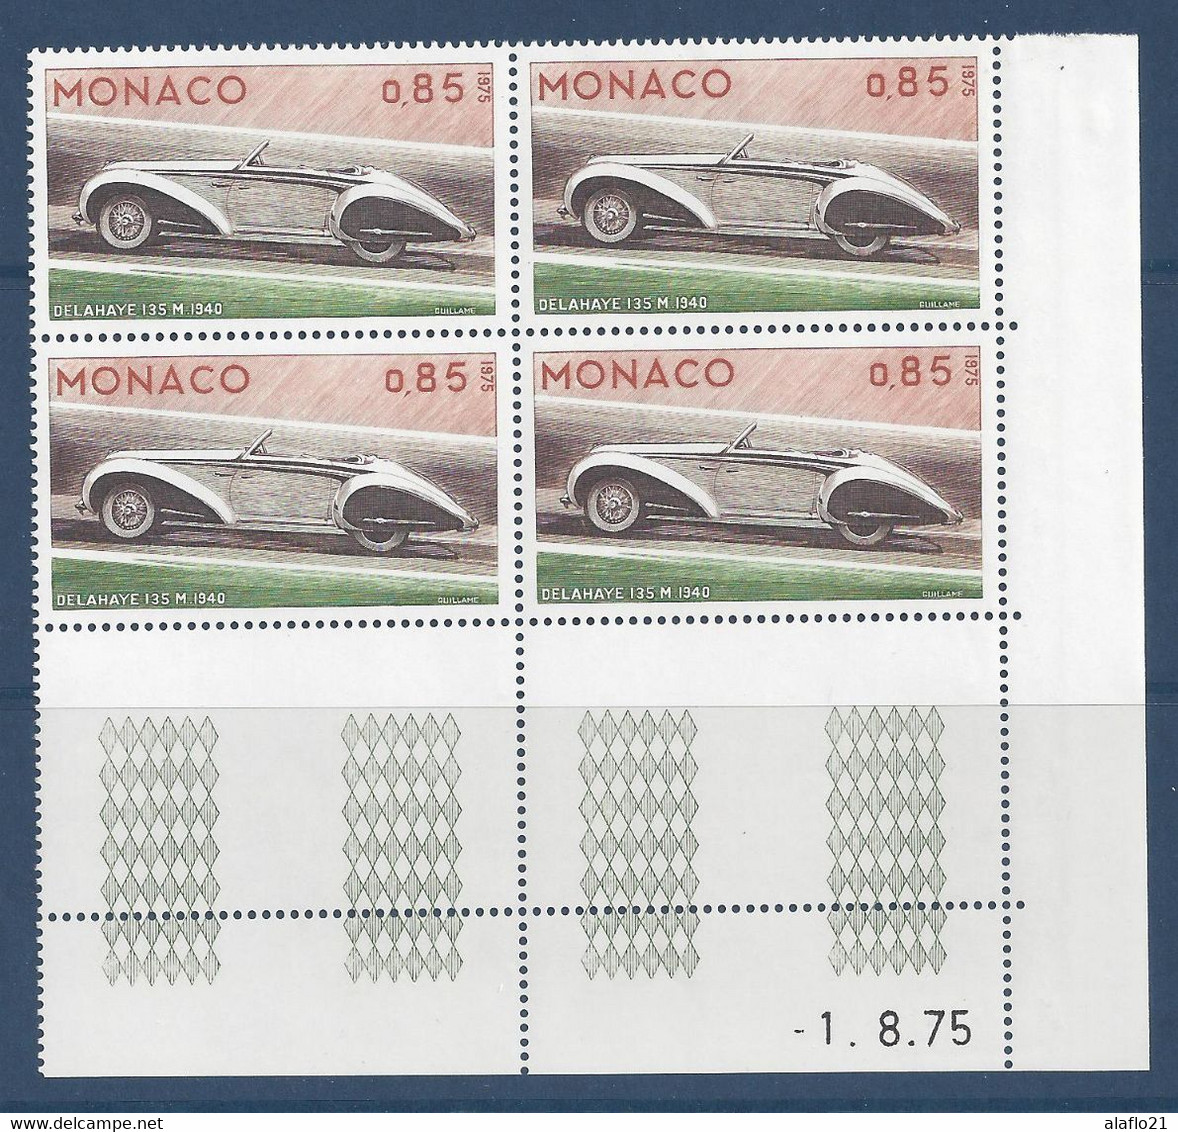 MONACO - N° 1025 - DELAHAYE 135M 1940 - Bloc De 4 COIN DATE - NEUF SANS CHARNIERE - 1/8/75 - Unused Stamps